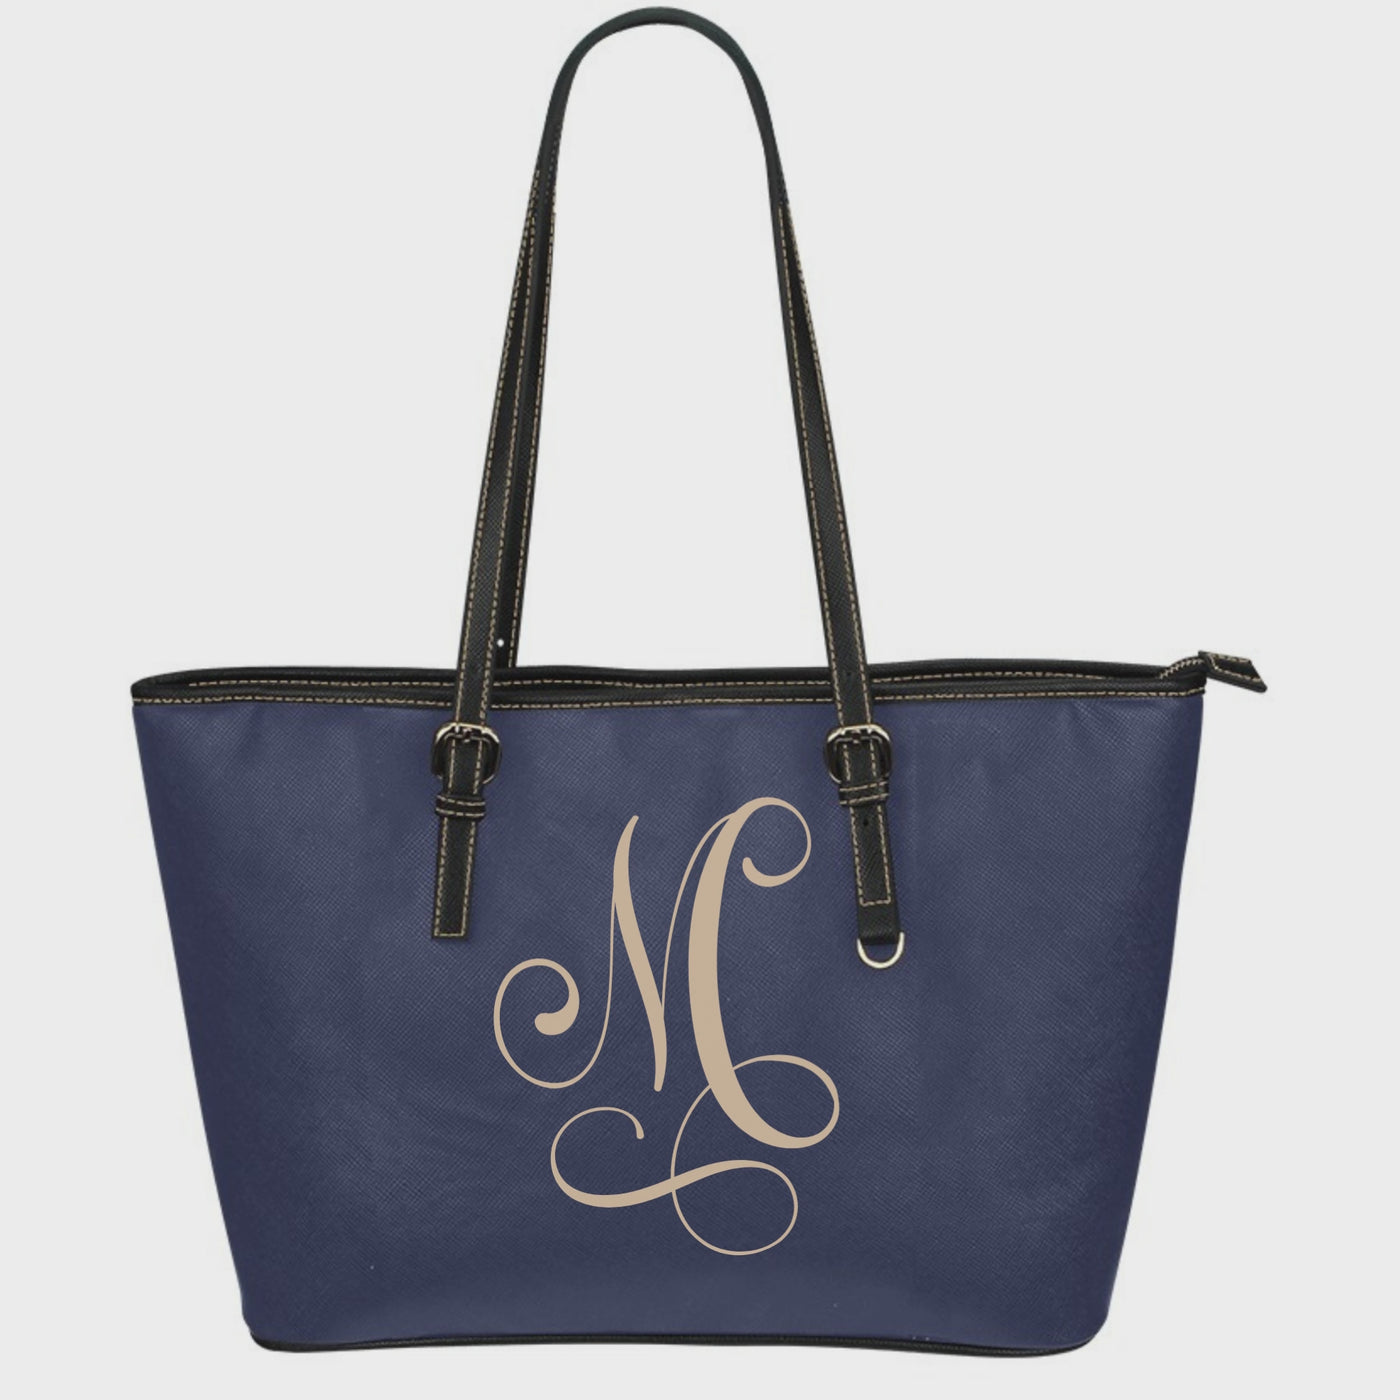 Custom PU Leather Tote Bag,  add Initial Monogram or Design Image for Print